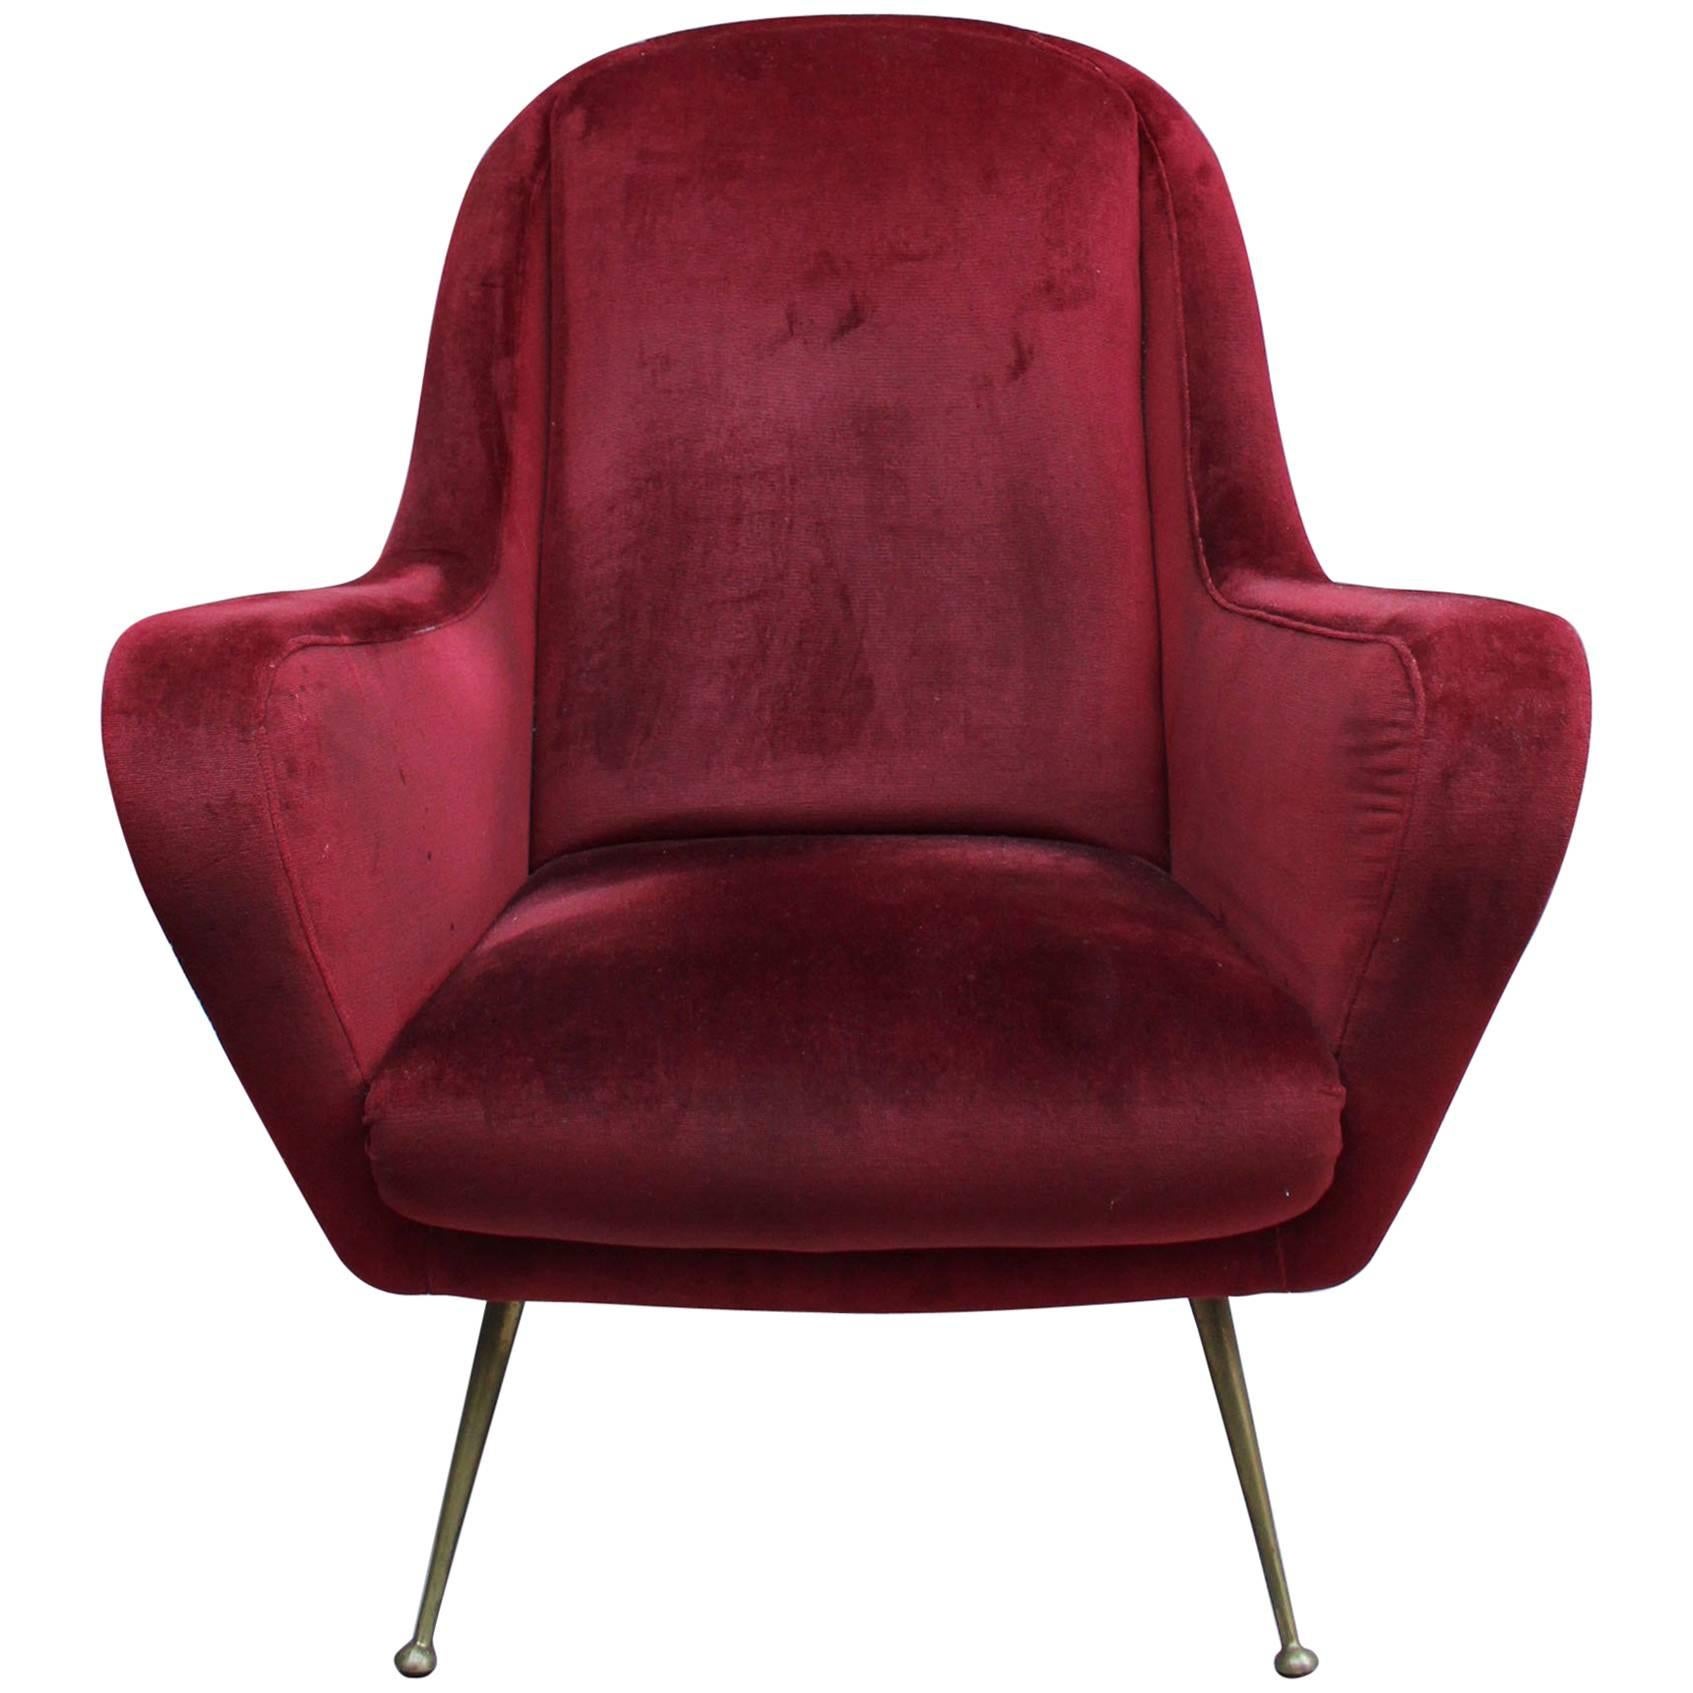 A Fine 1970's Italian Red Velvet Armchair with Brass Legs For Sale